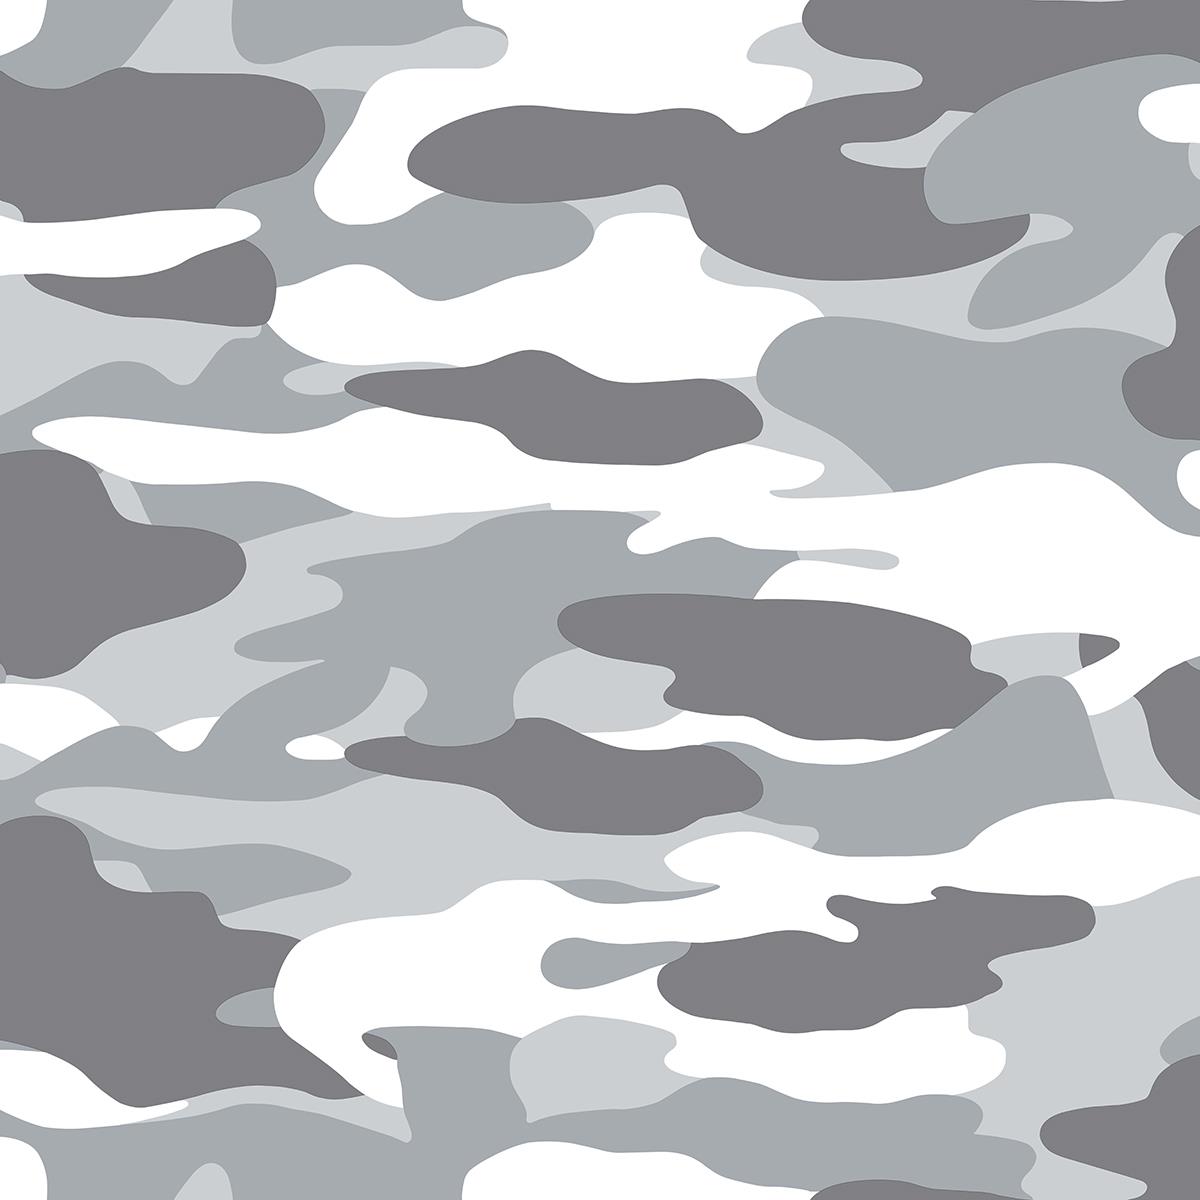 Shades Camouflage Wallpaper Army Camo Black Grey Green Children Teenager Boys